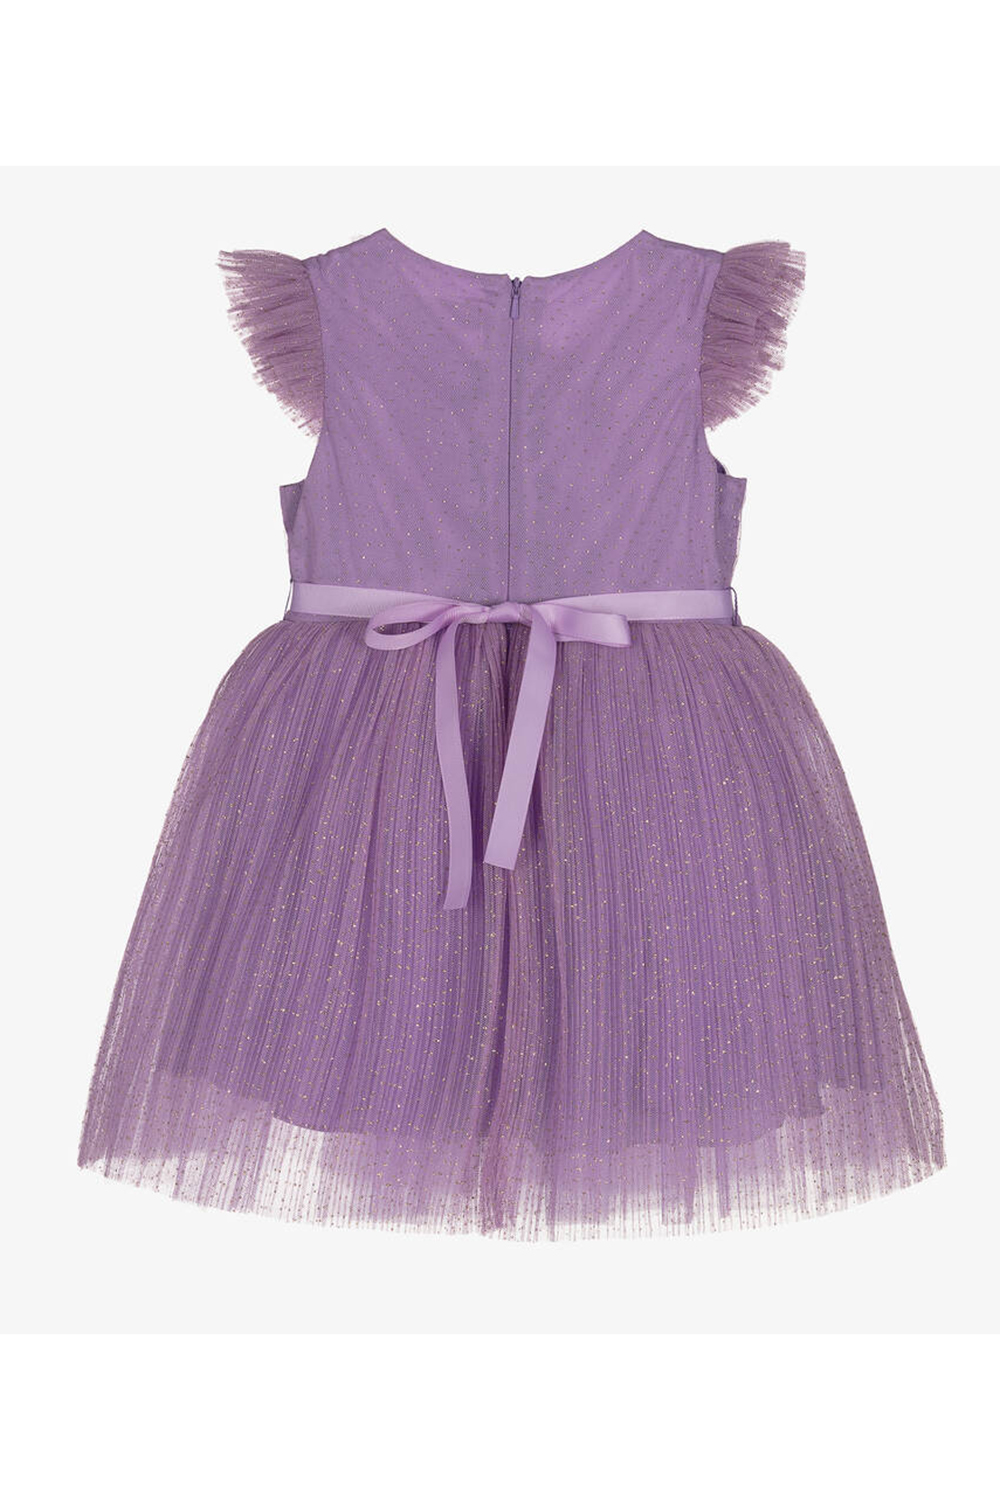 Lilac Ruffled Birthday Dress